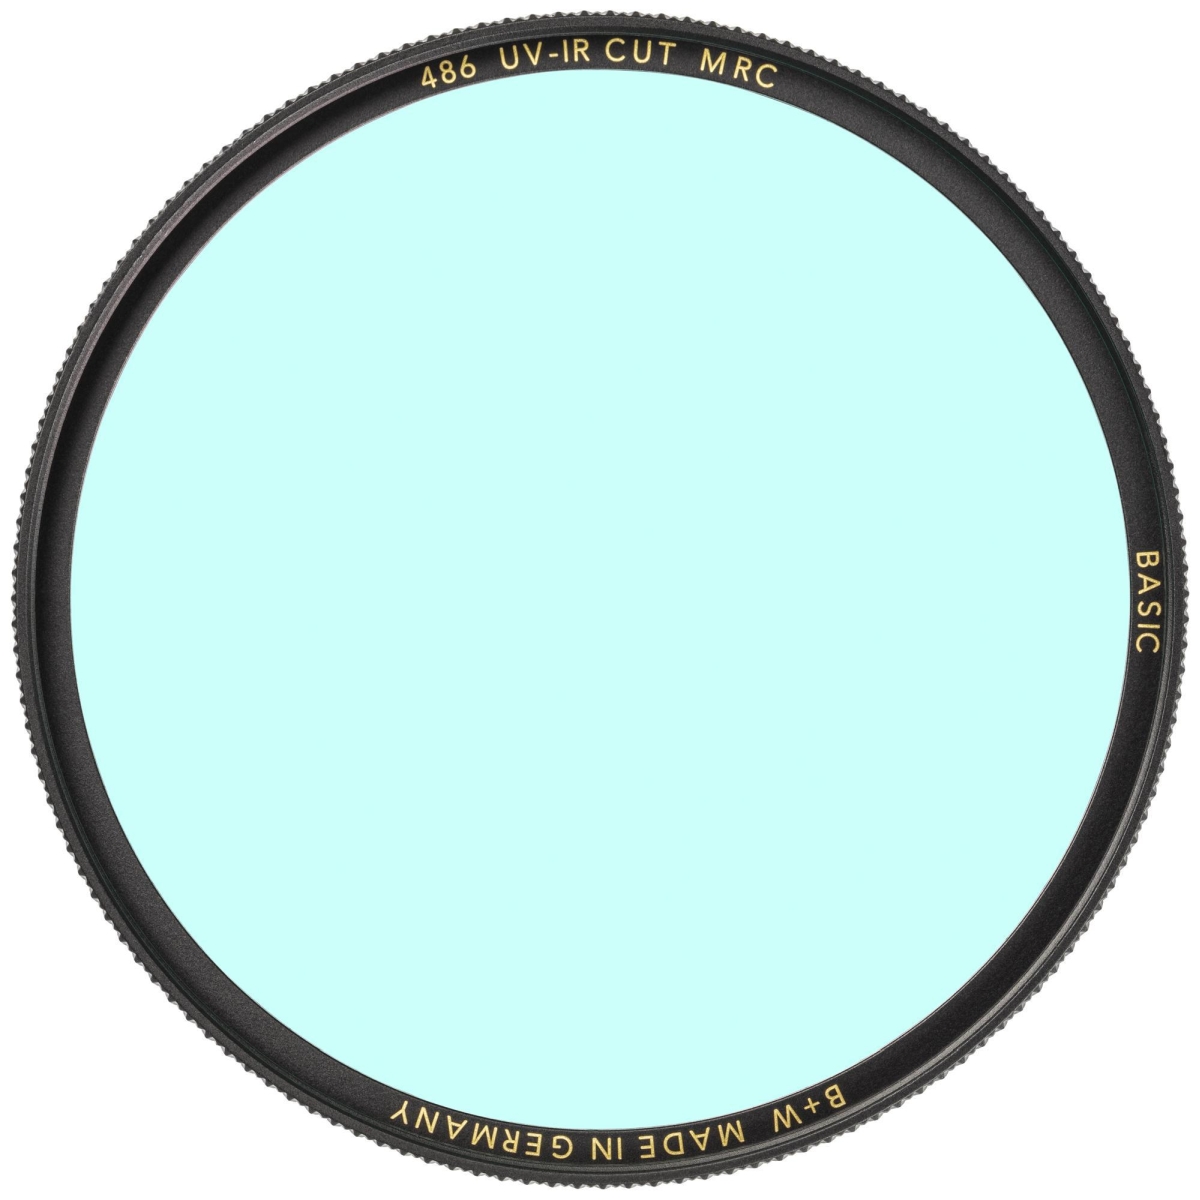 B+W UV-IR Cut 49 mm MRC Basic